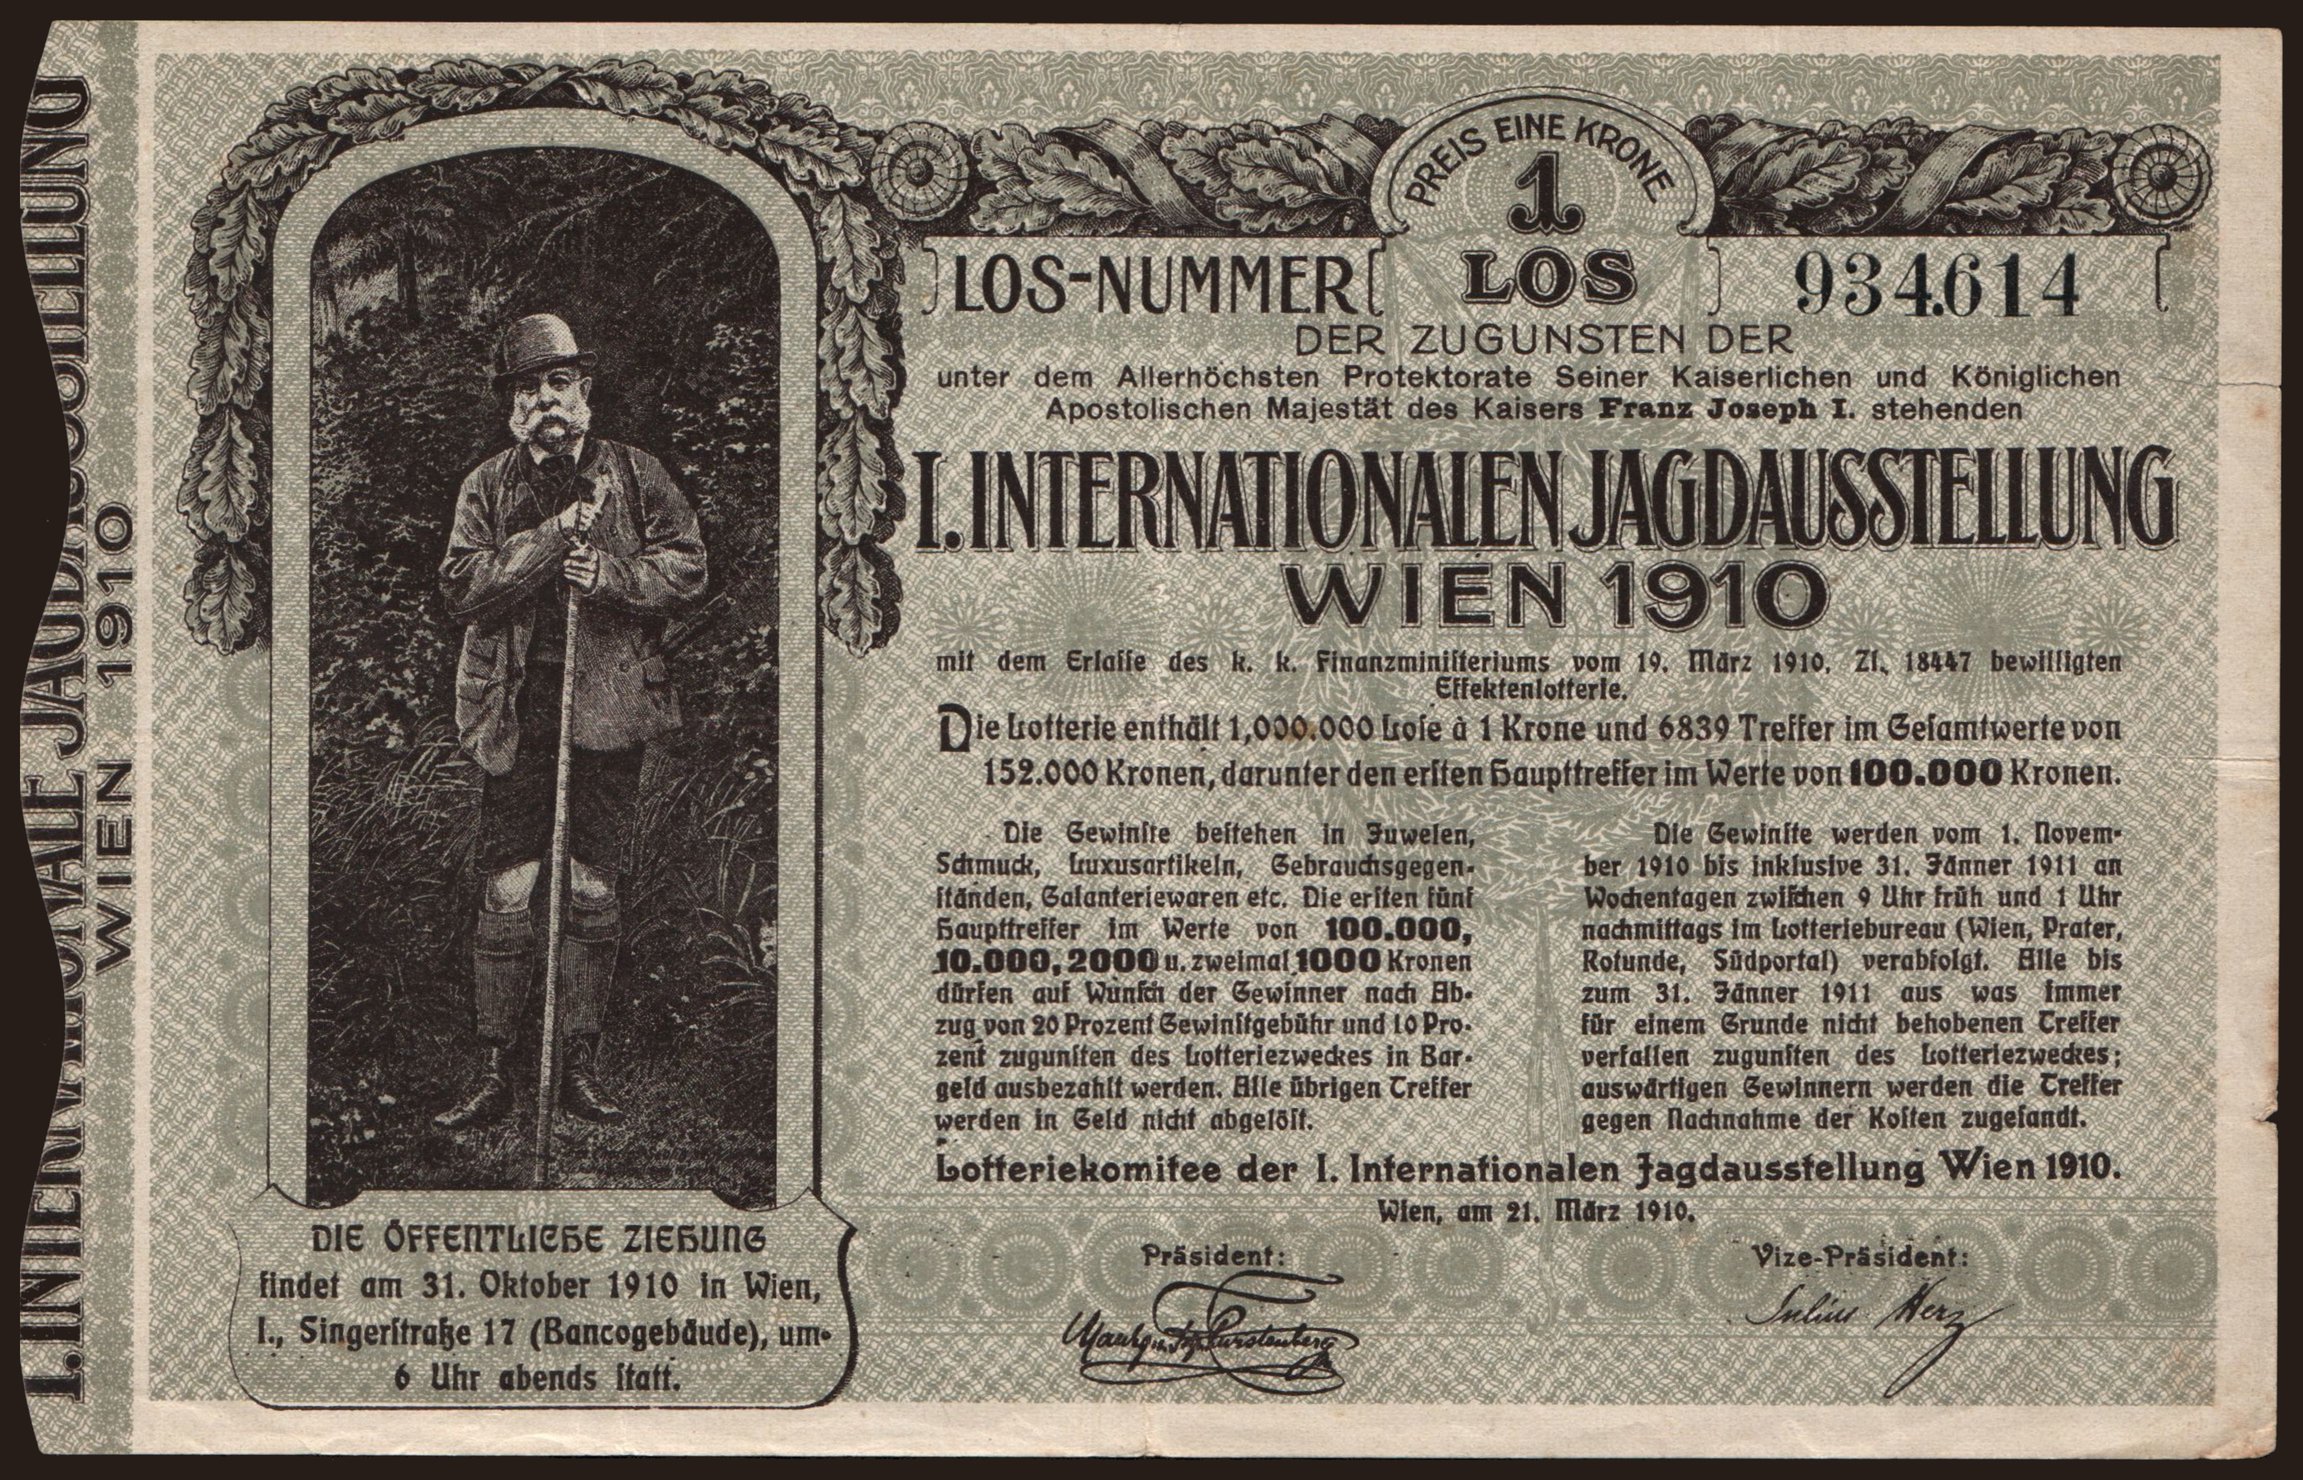 I. Internationalen Jagdausstellung, 1 Krone, 1910